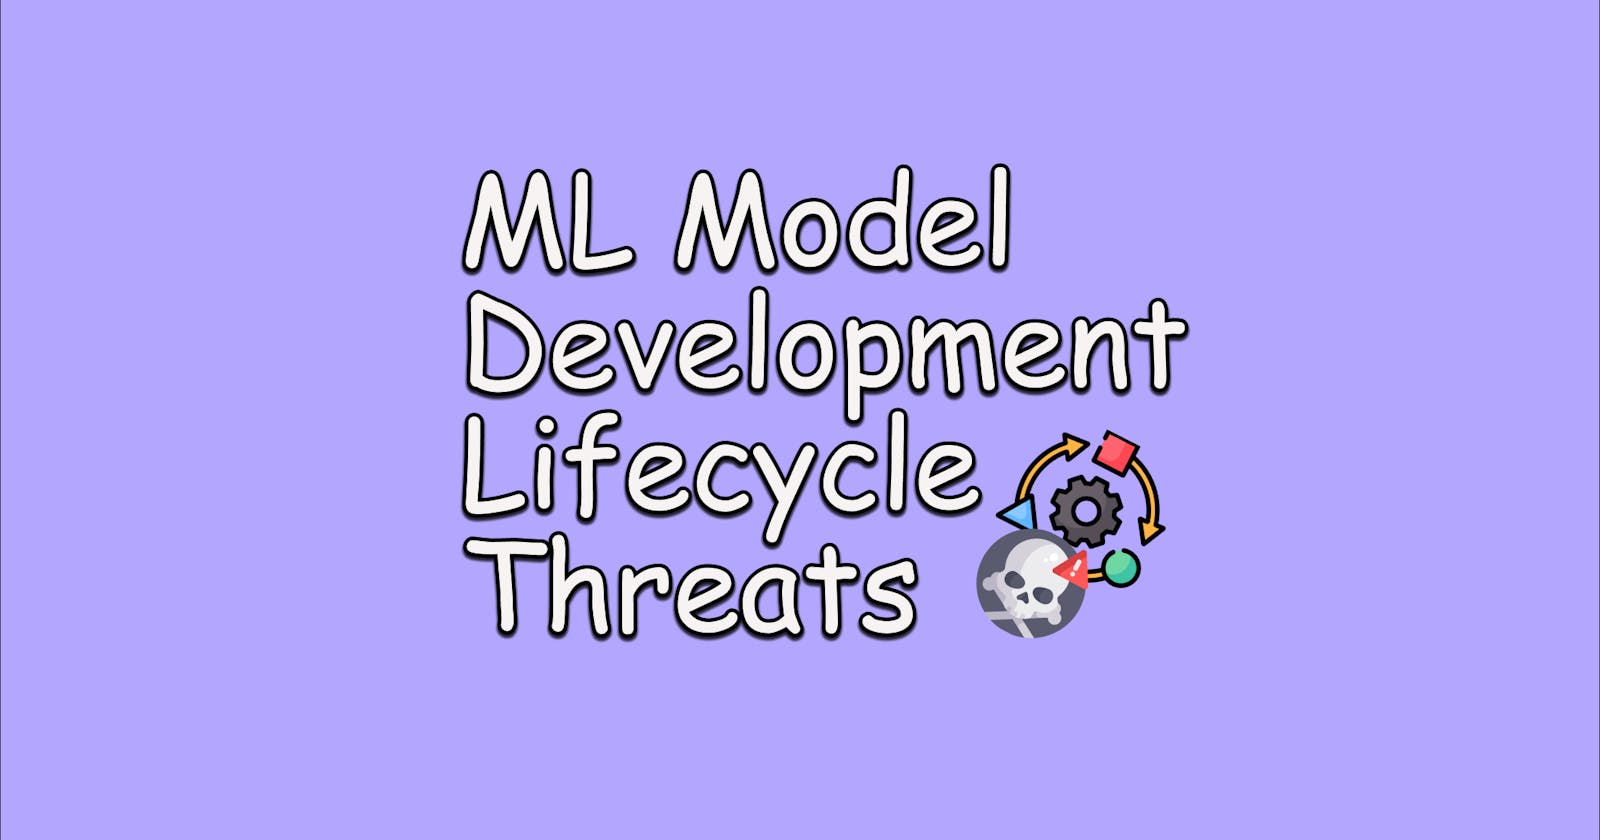 ML Model Development Lifecycle Threats